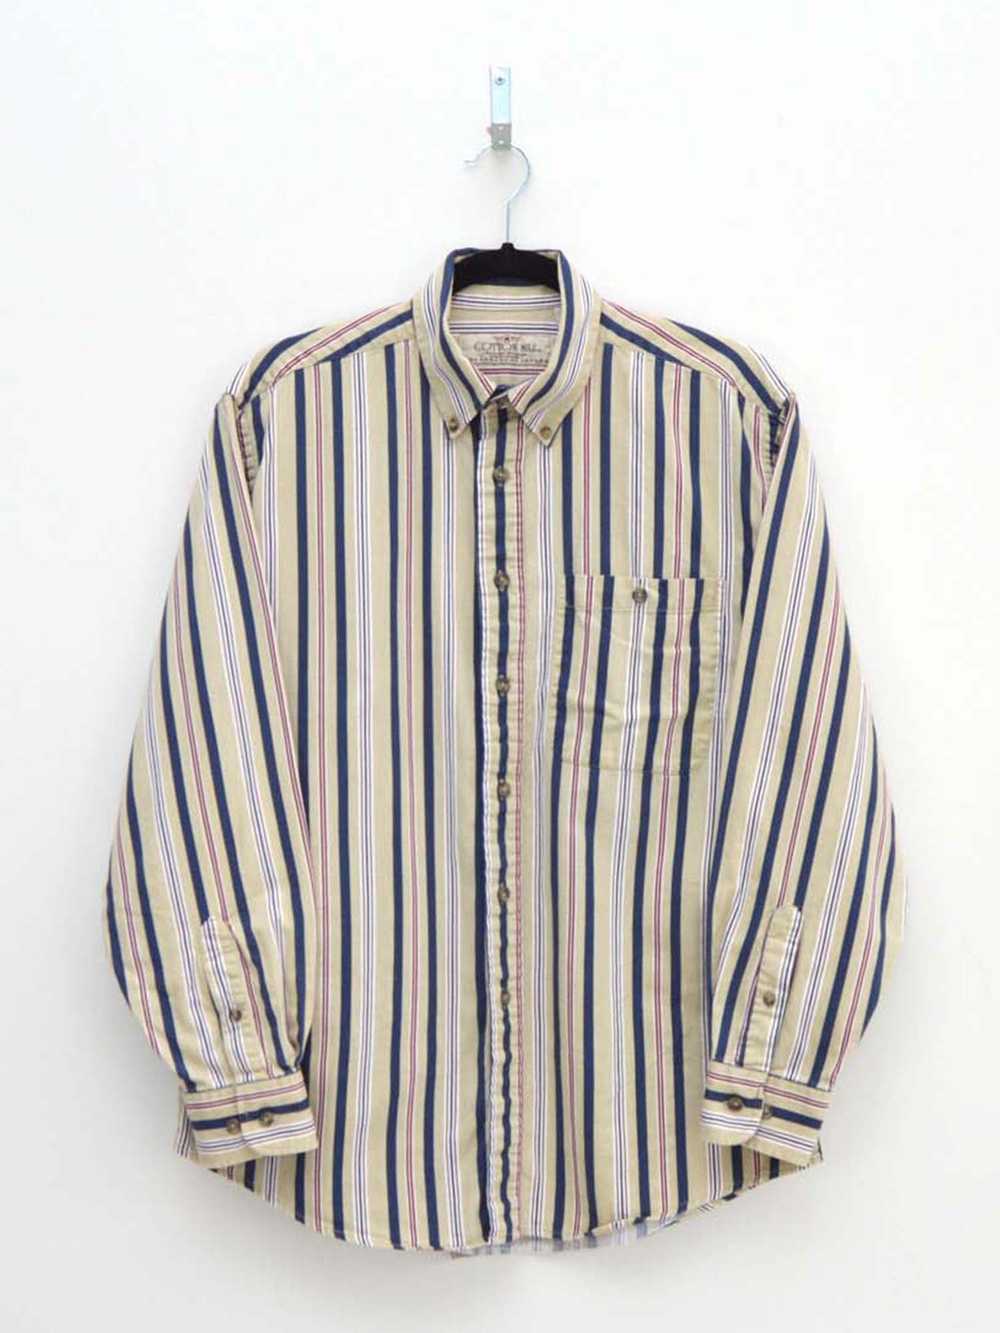 Vintage Beige & Navy Striped Shirt (M) - image 1